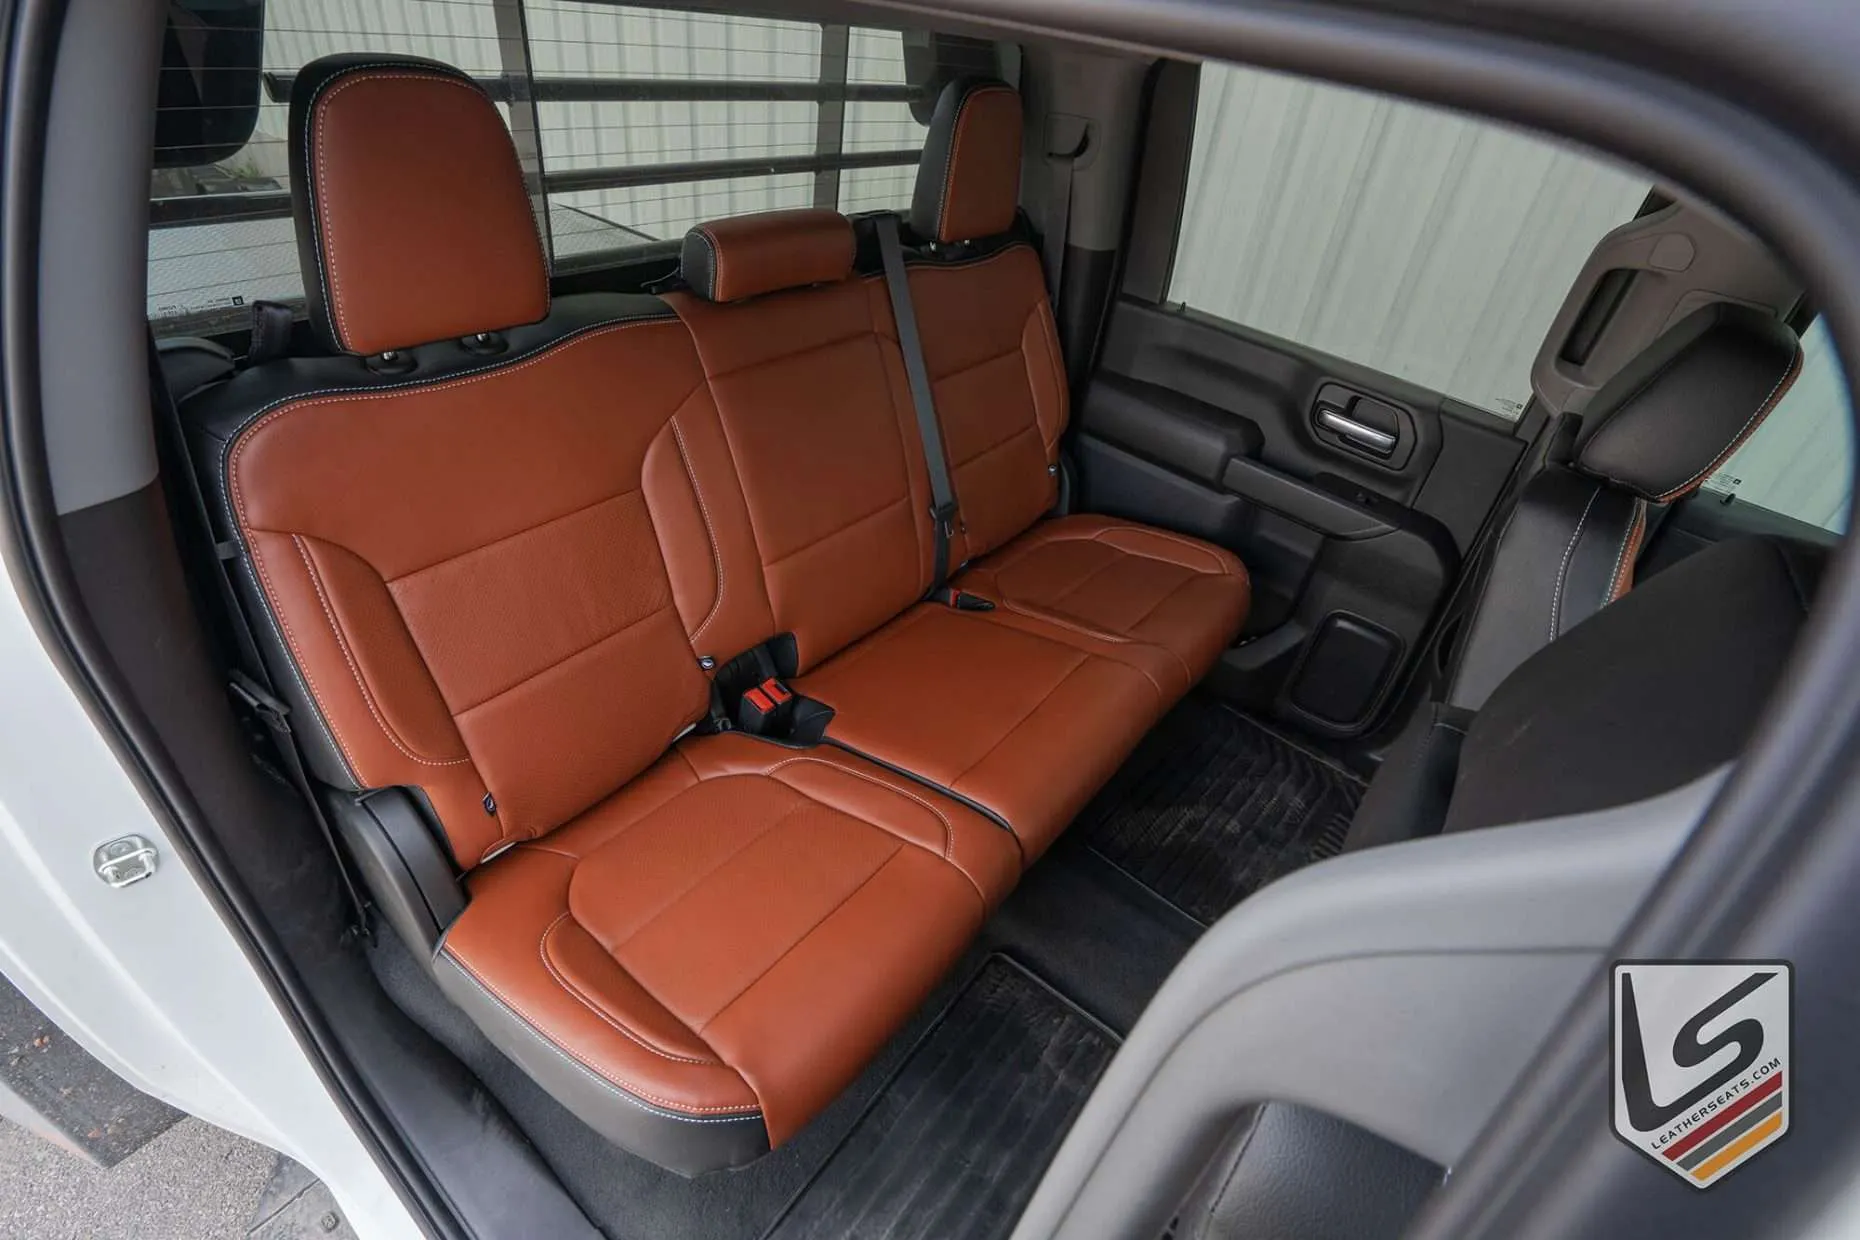 2019-2022 Chevrolety Silverado rear leather seats in Ecstasy Black and Ecstasy Mitt Brown